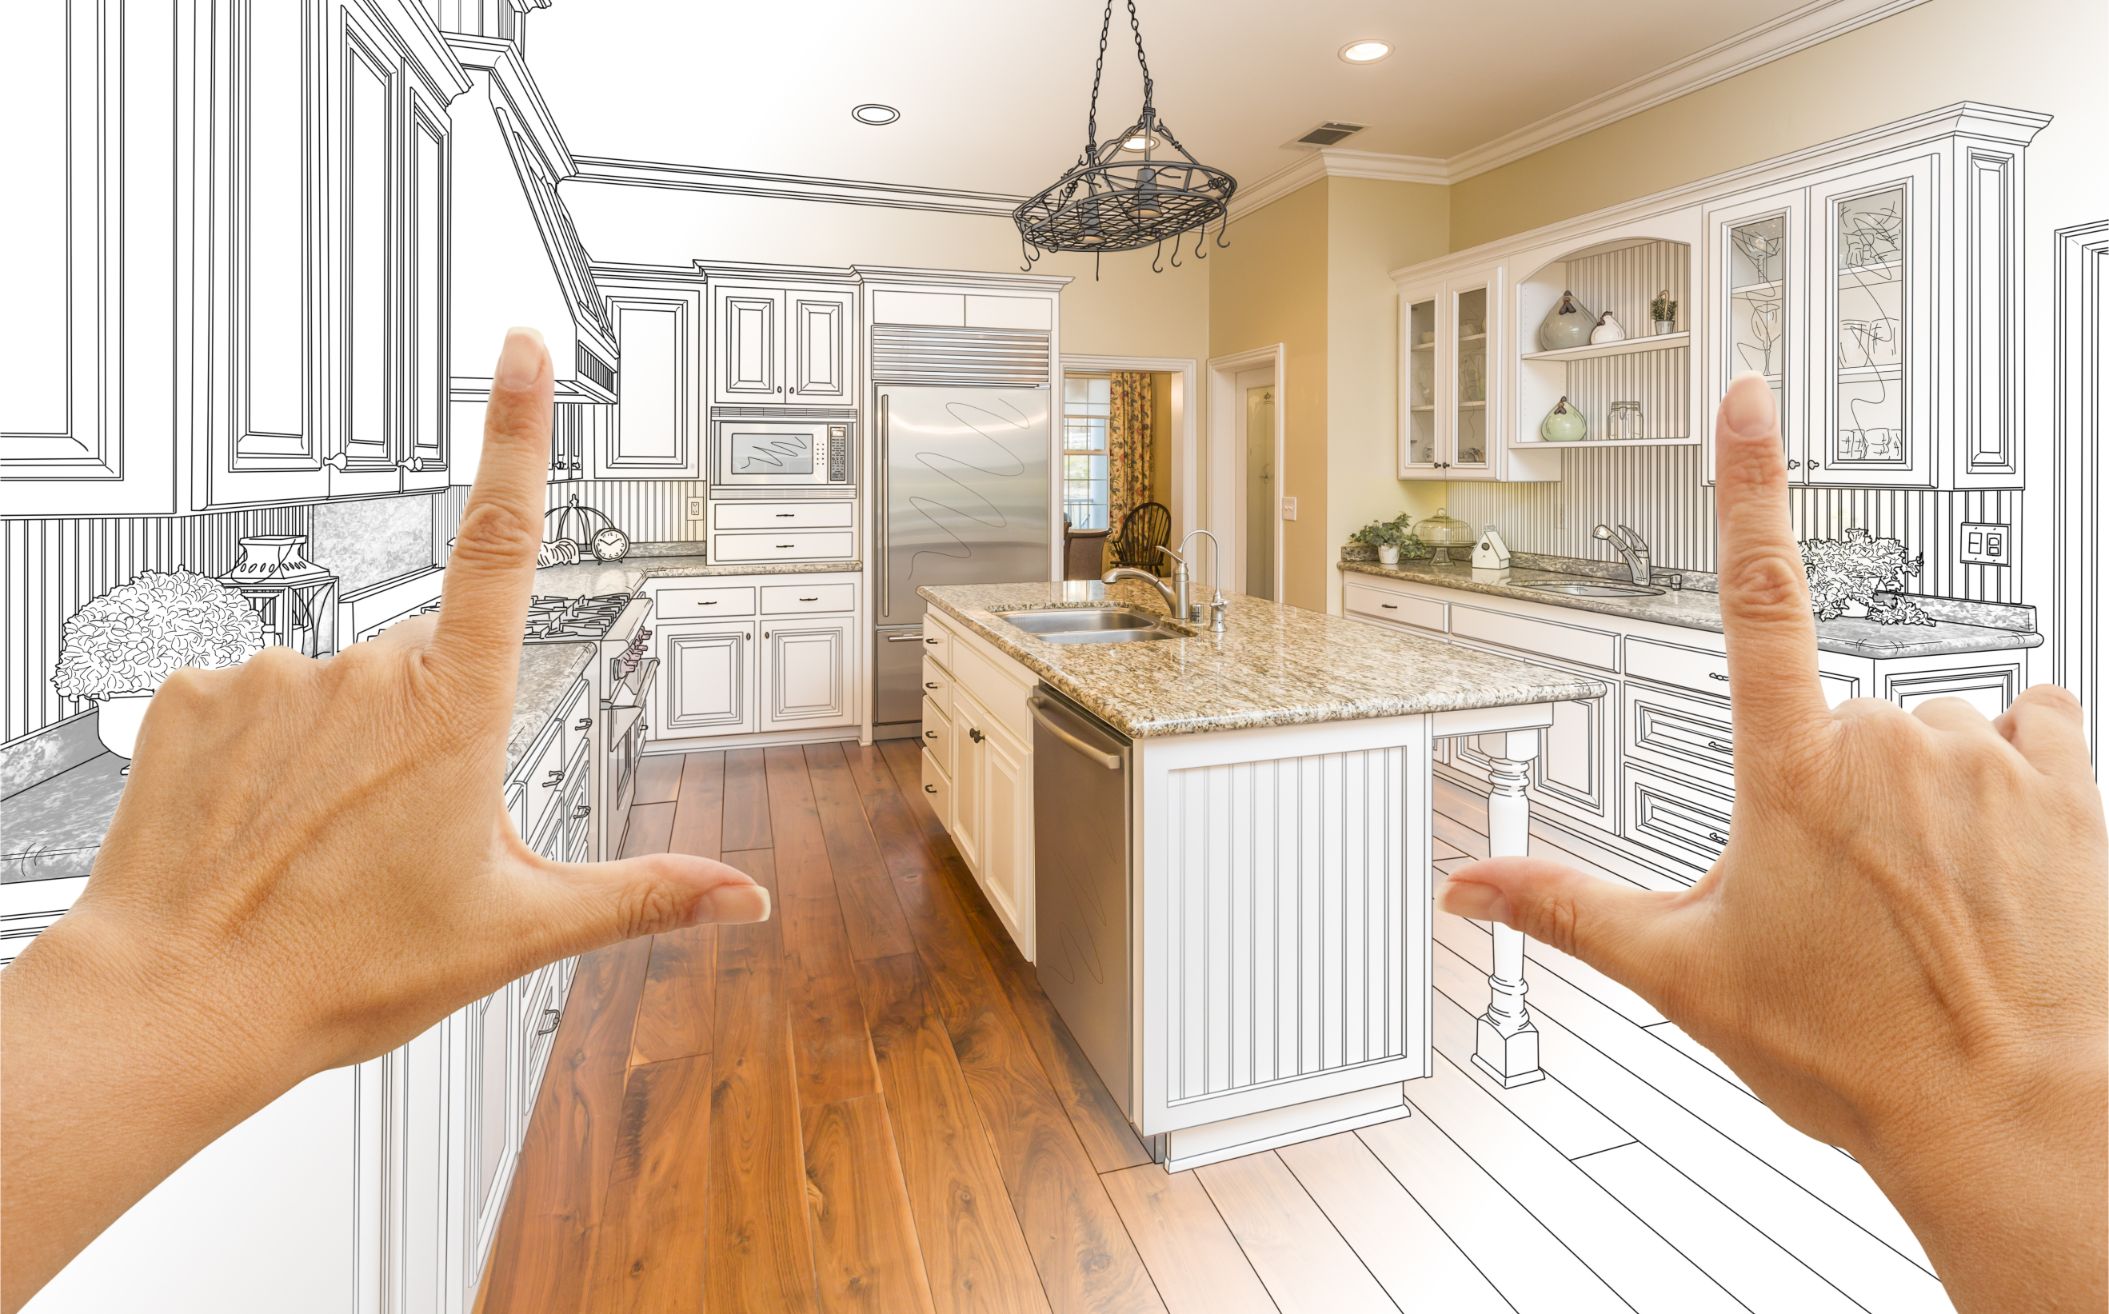 Kitchen Trends in 2020 for interior design